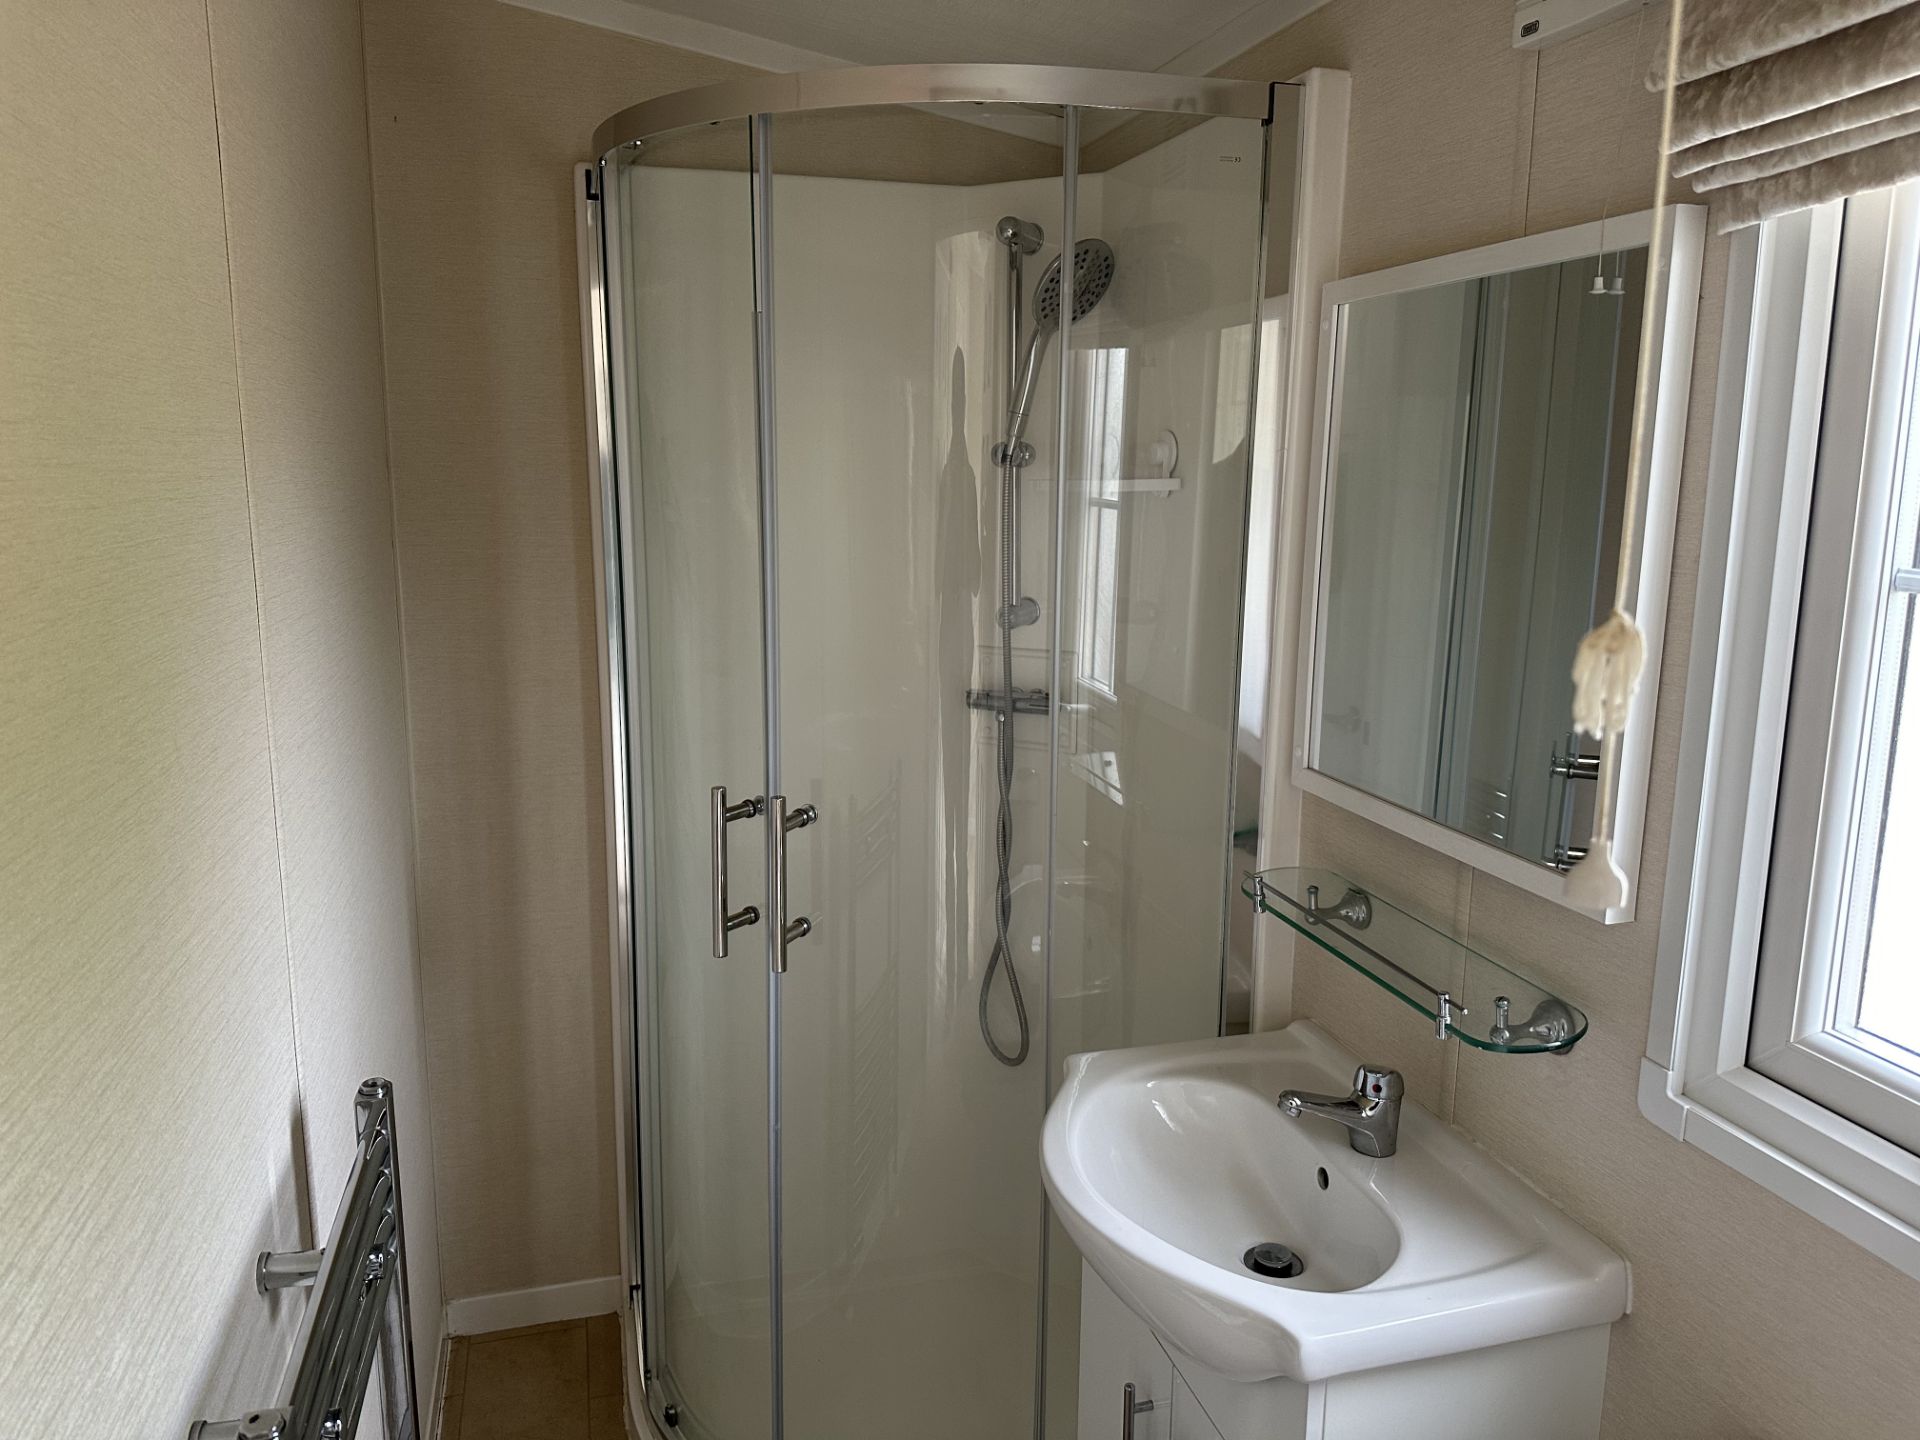 European Mobile Home '2022 Model' 36x14 Ruby Edition - 2 Bedroom - Bathroom - Image 31 of 46